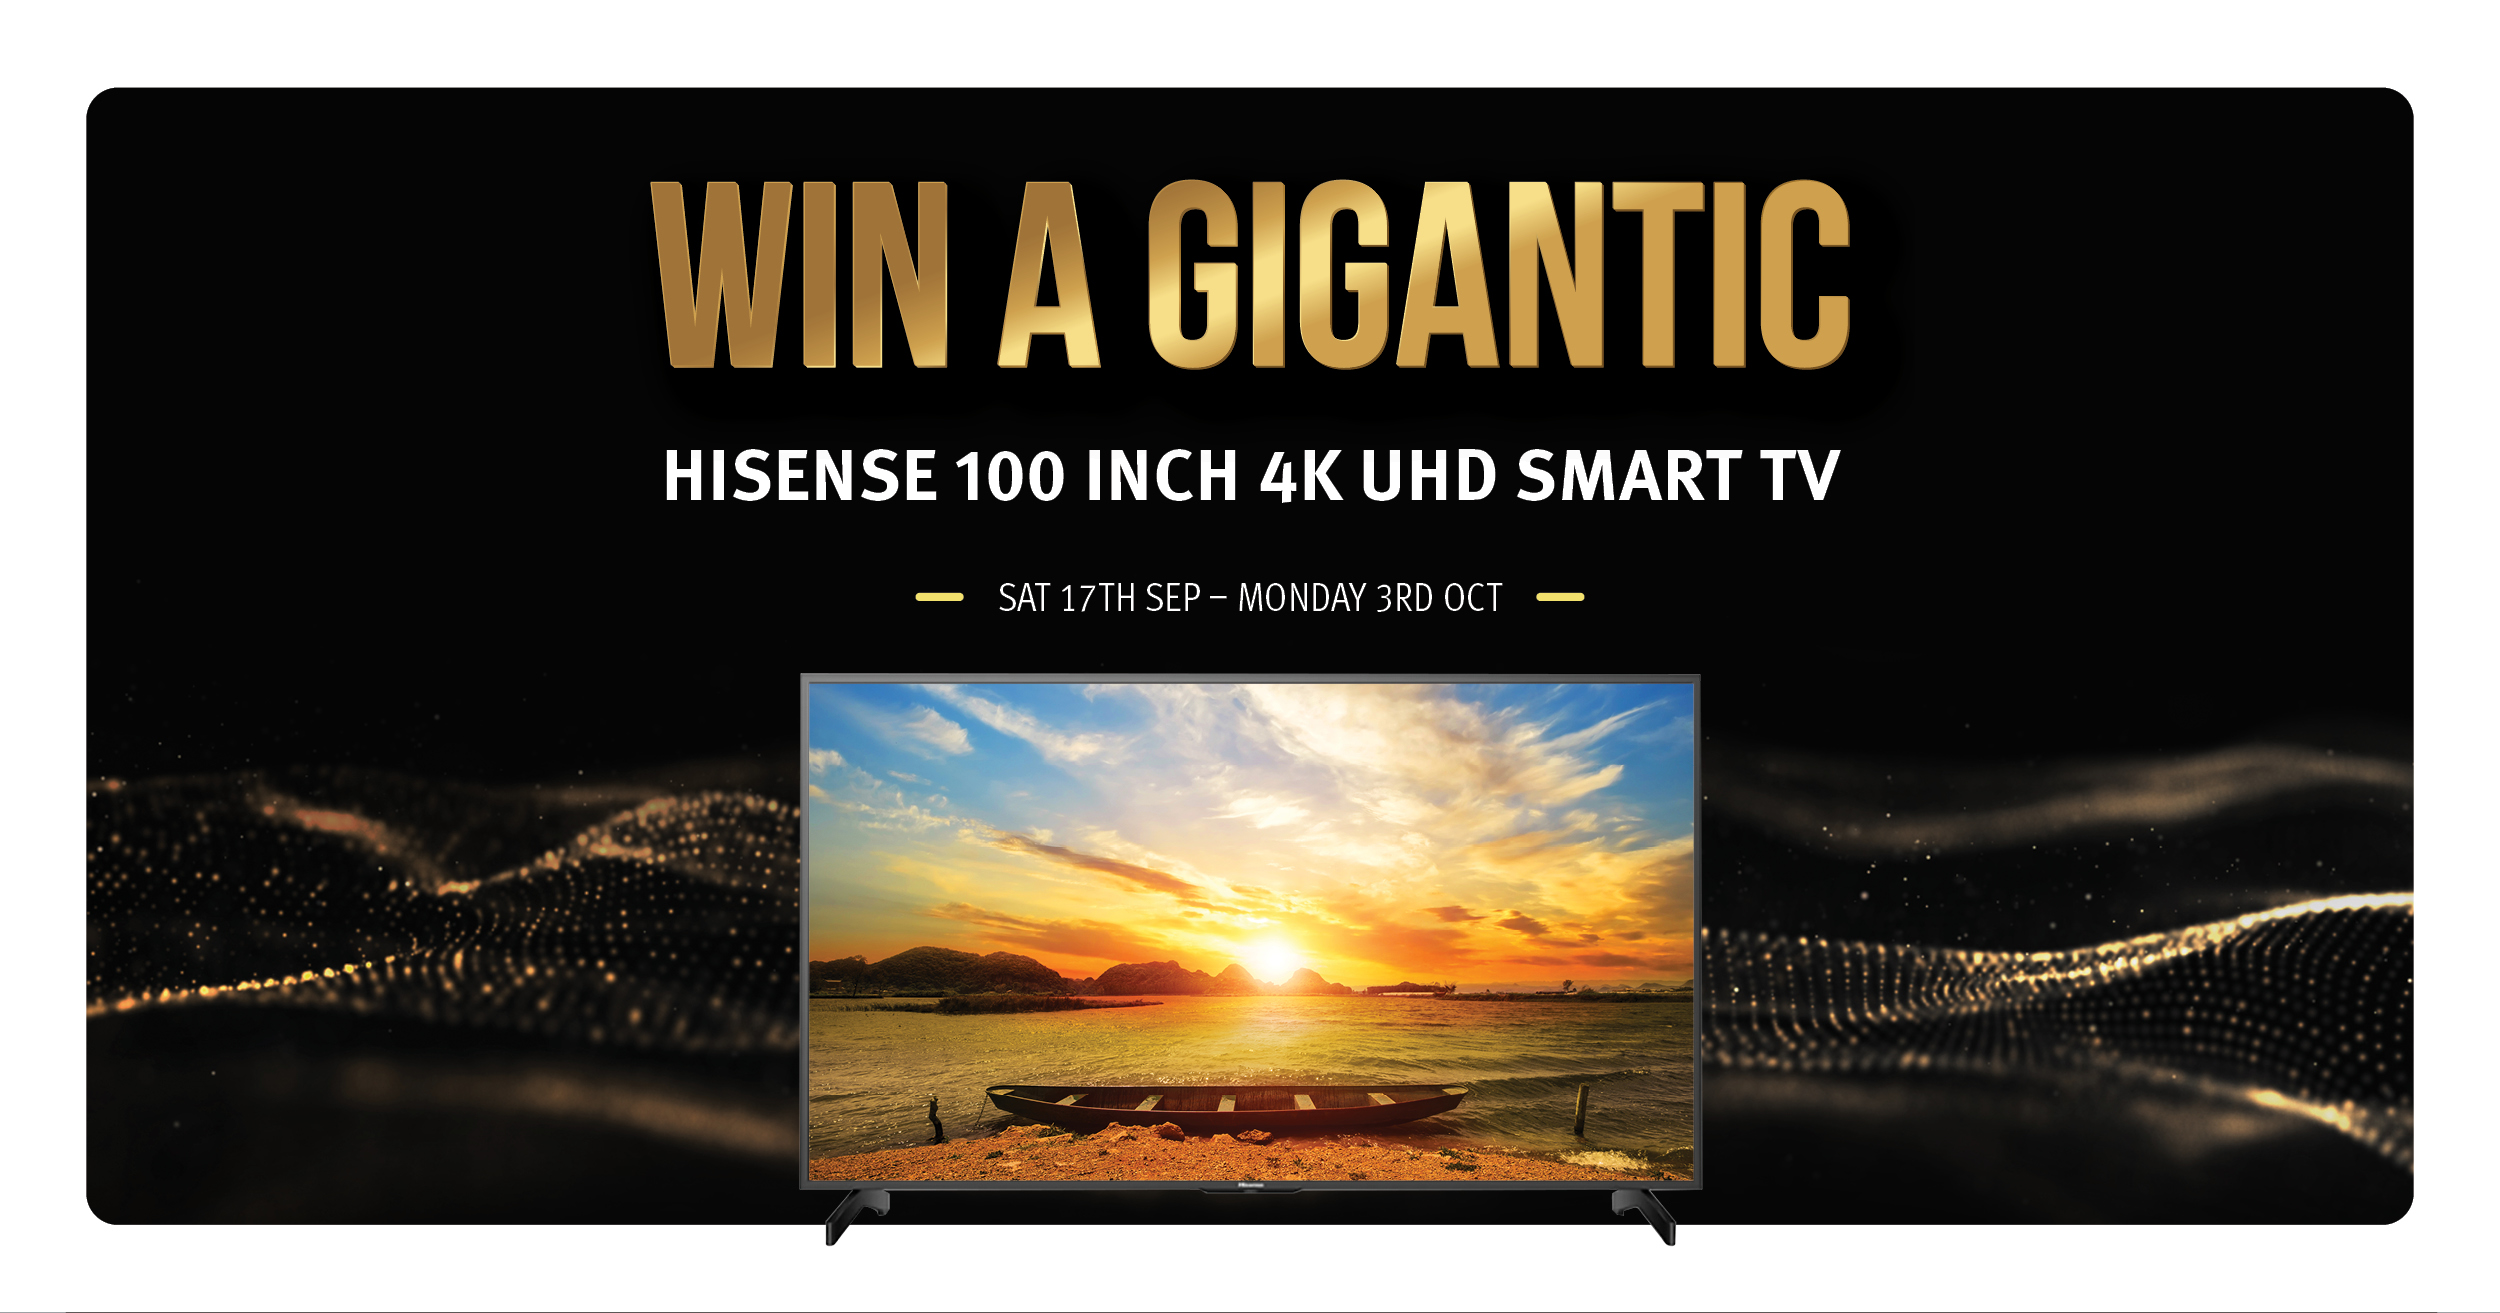 WIN a Gigantic Hisense 100 inch 4K UHD Smart TV!